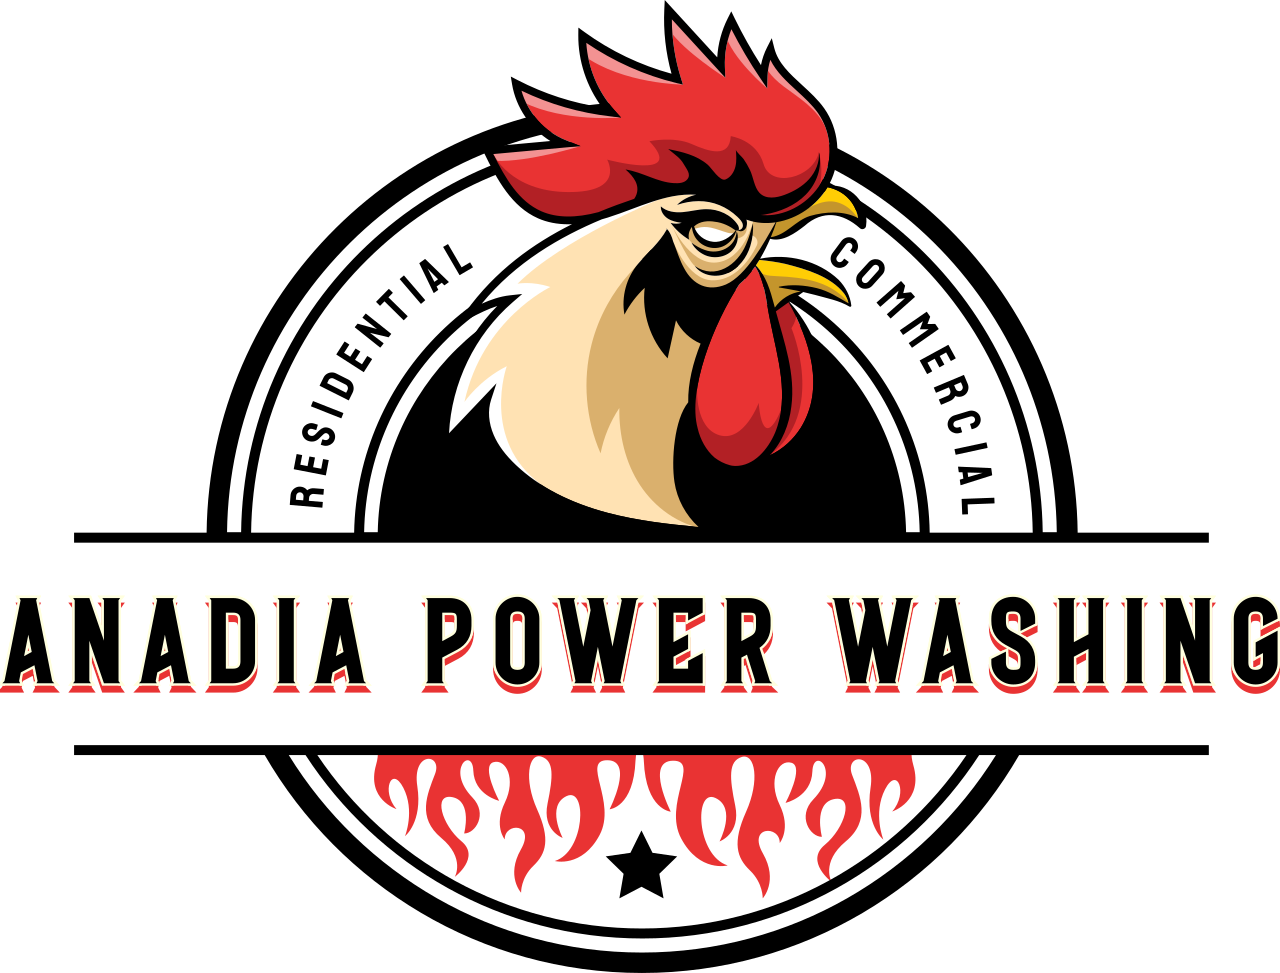 Anadia Power Washing's logo